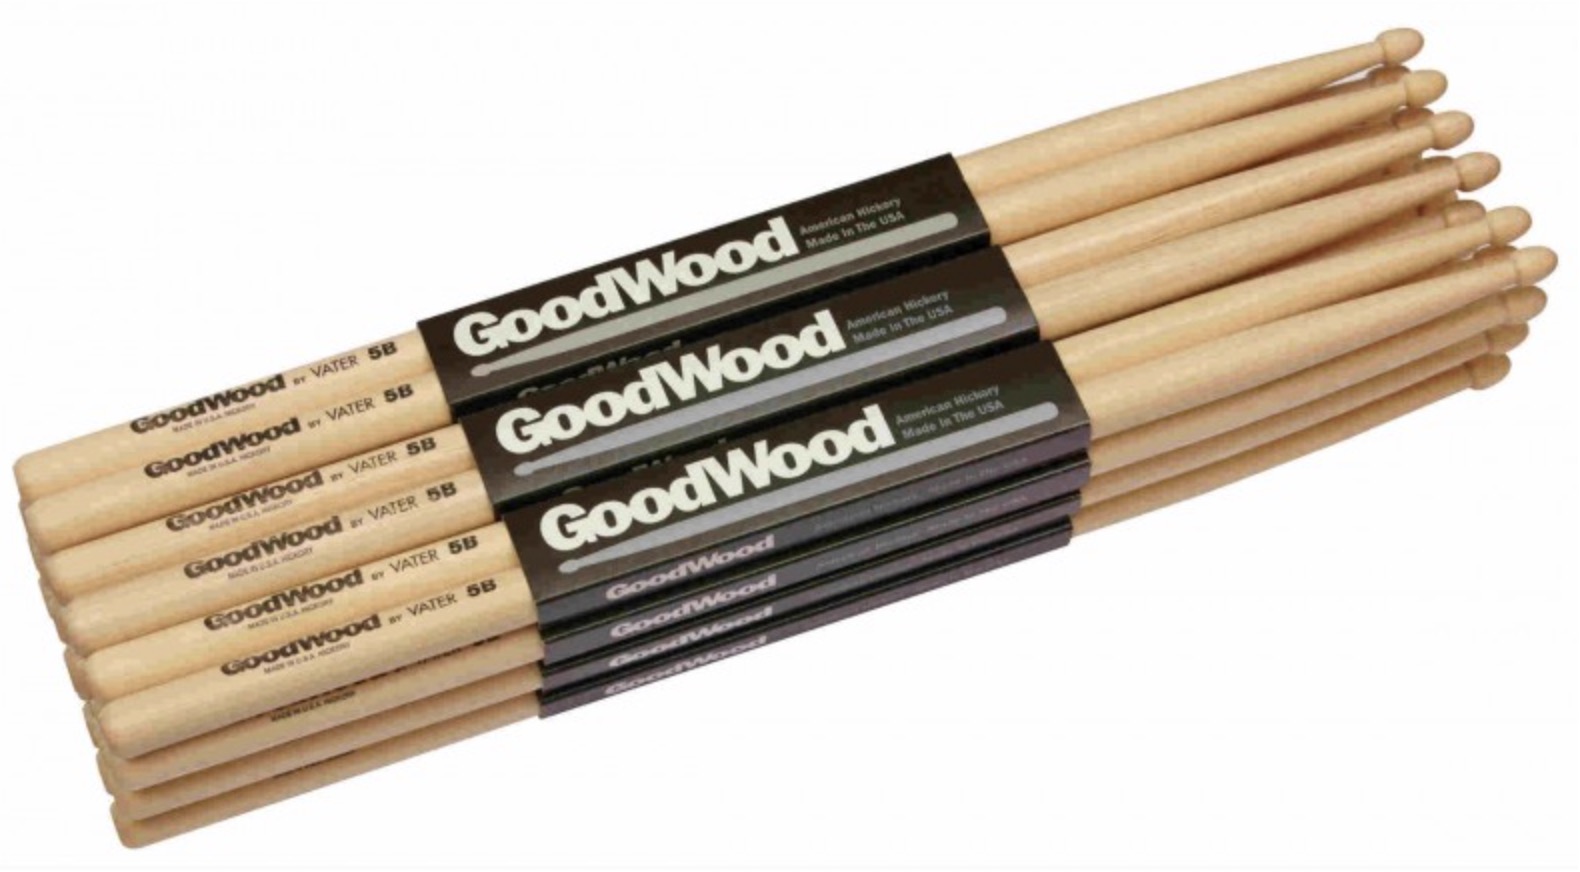 Goodwood (by Vater) gw5b 5b set drumstokken